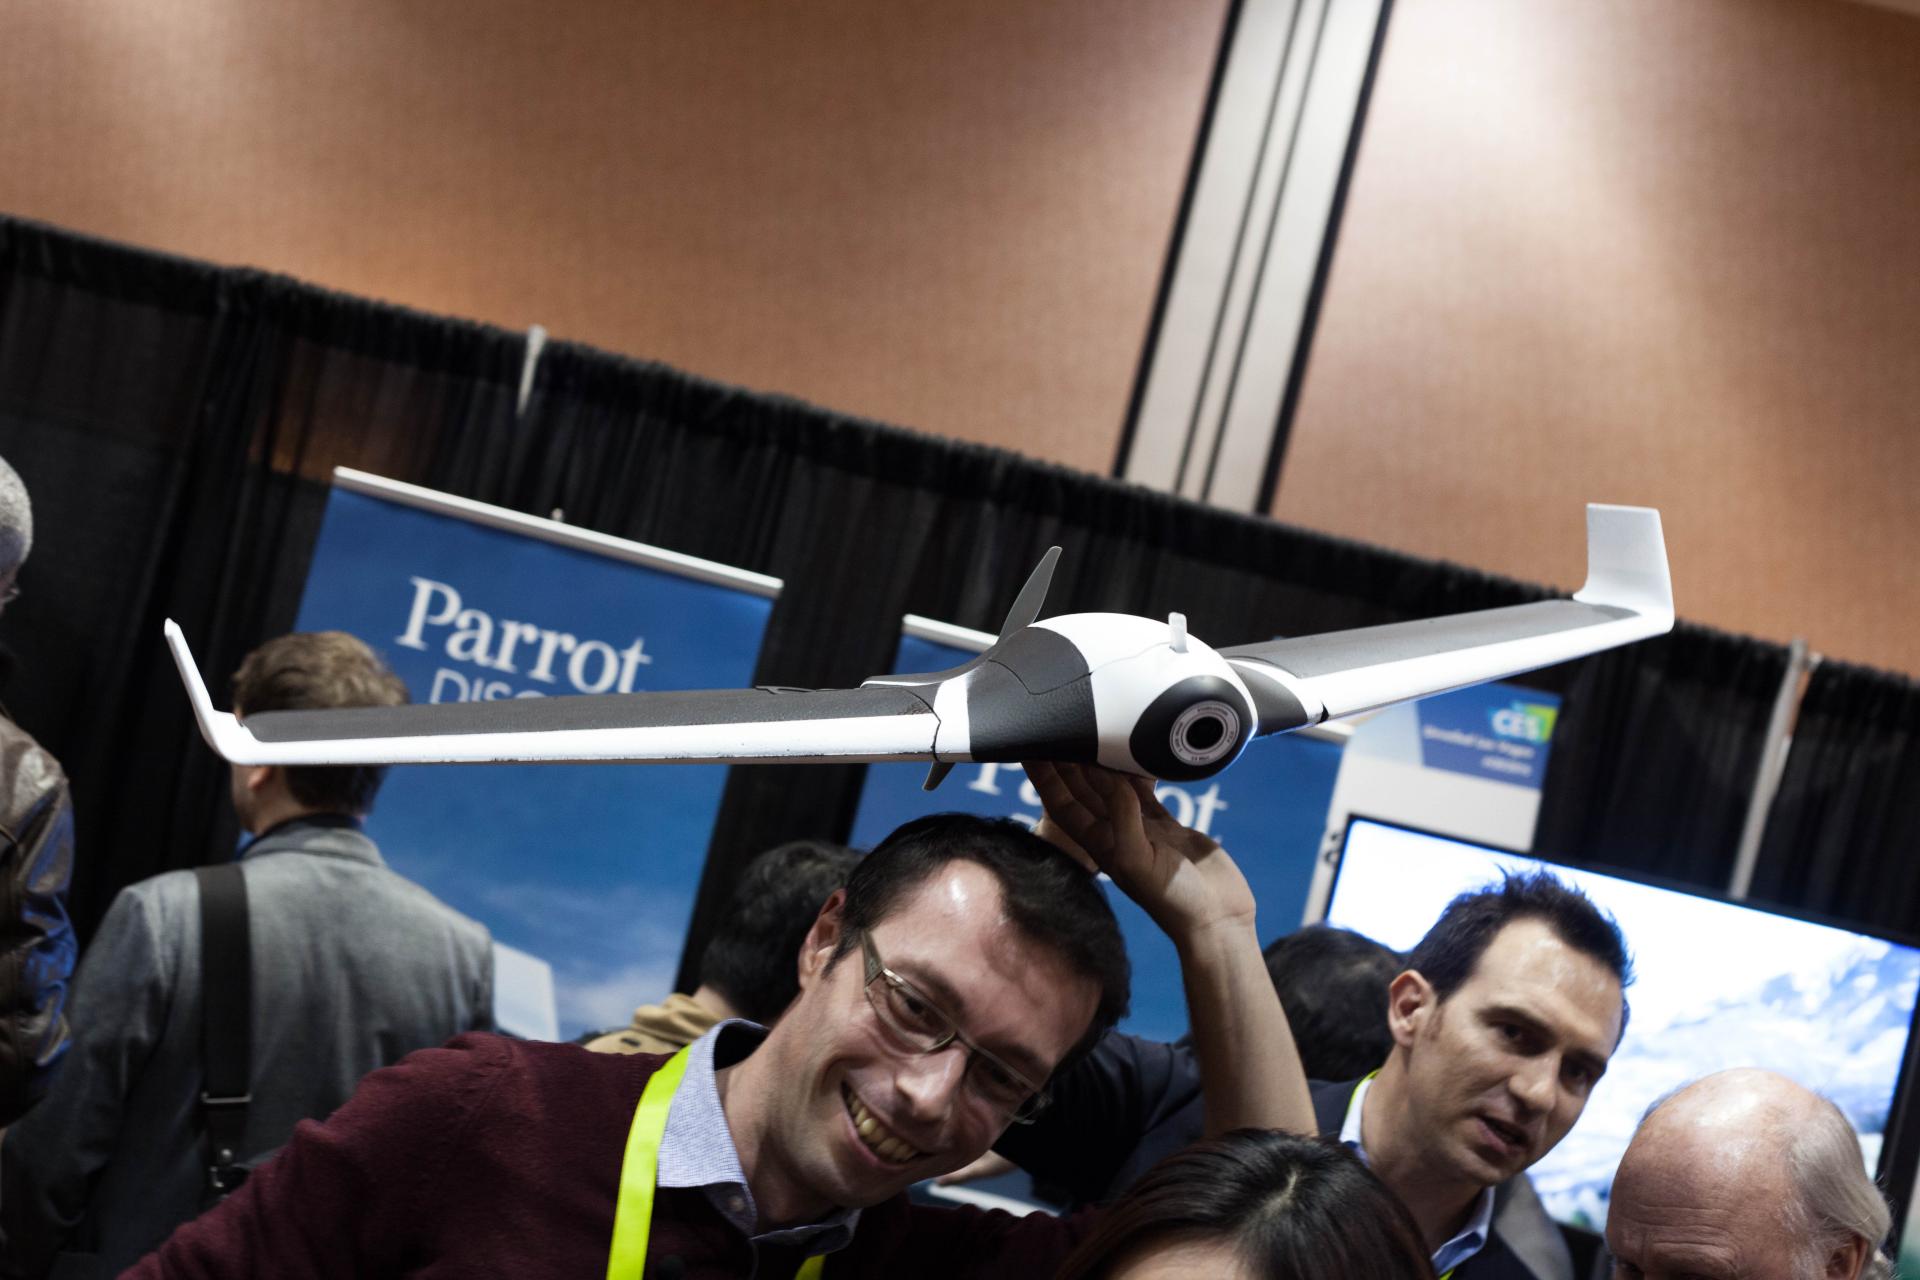 Parrot disco drona avion